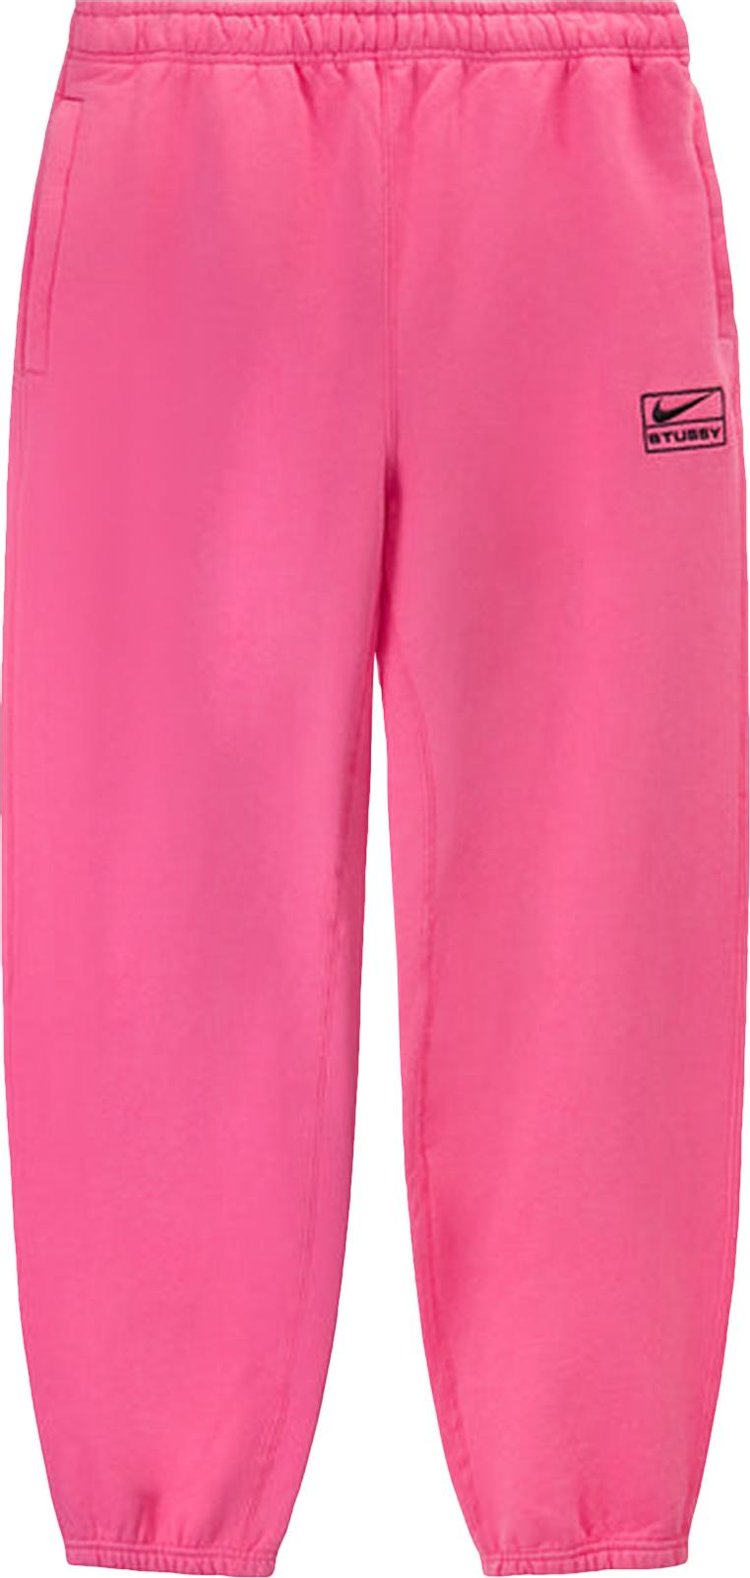 Buy Nike x Stussy NRG Washed Fleece Pant 'Lotus Pink' - DO5296 670